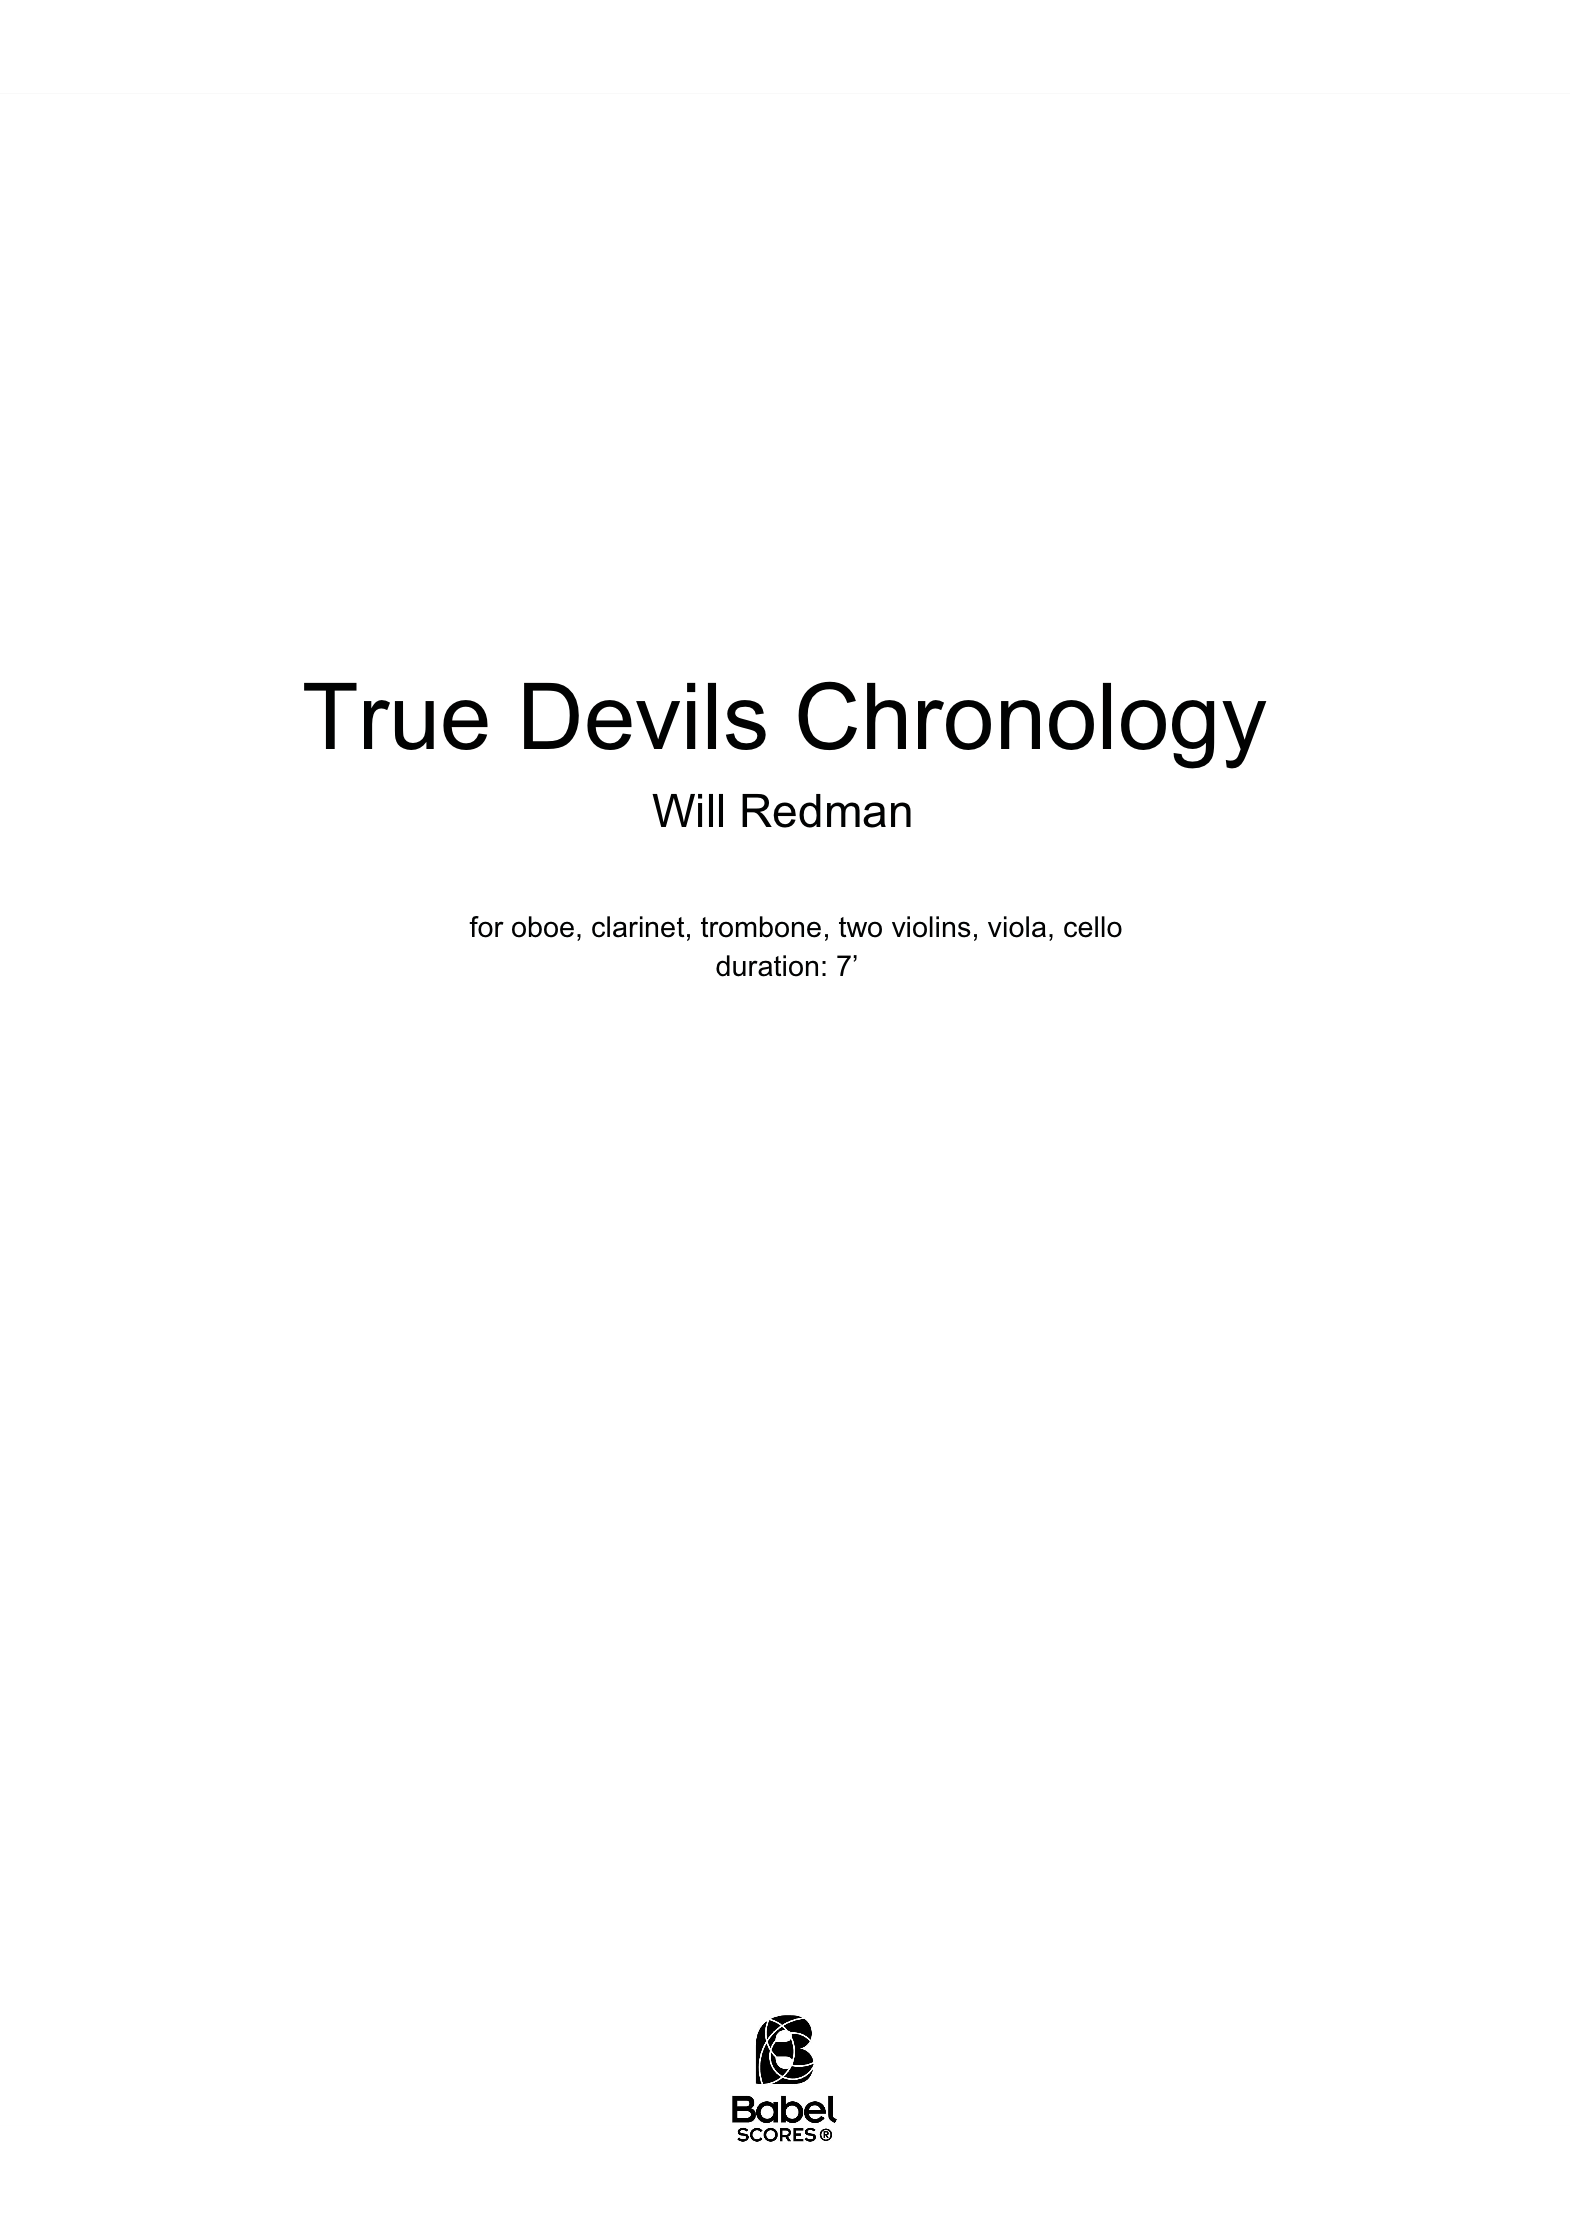 True Devils Chronology A4 z